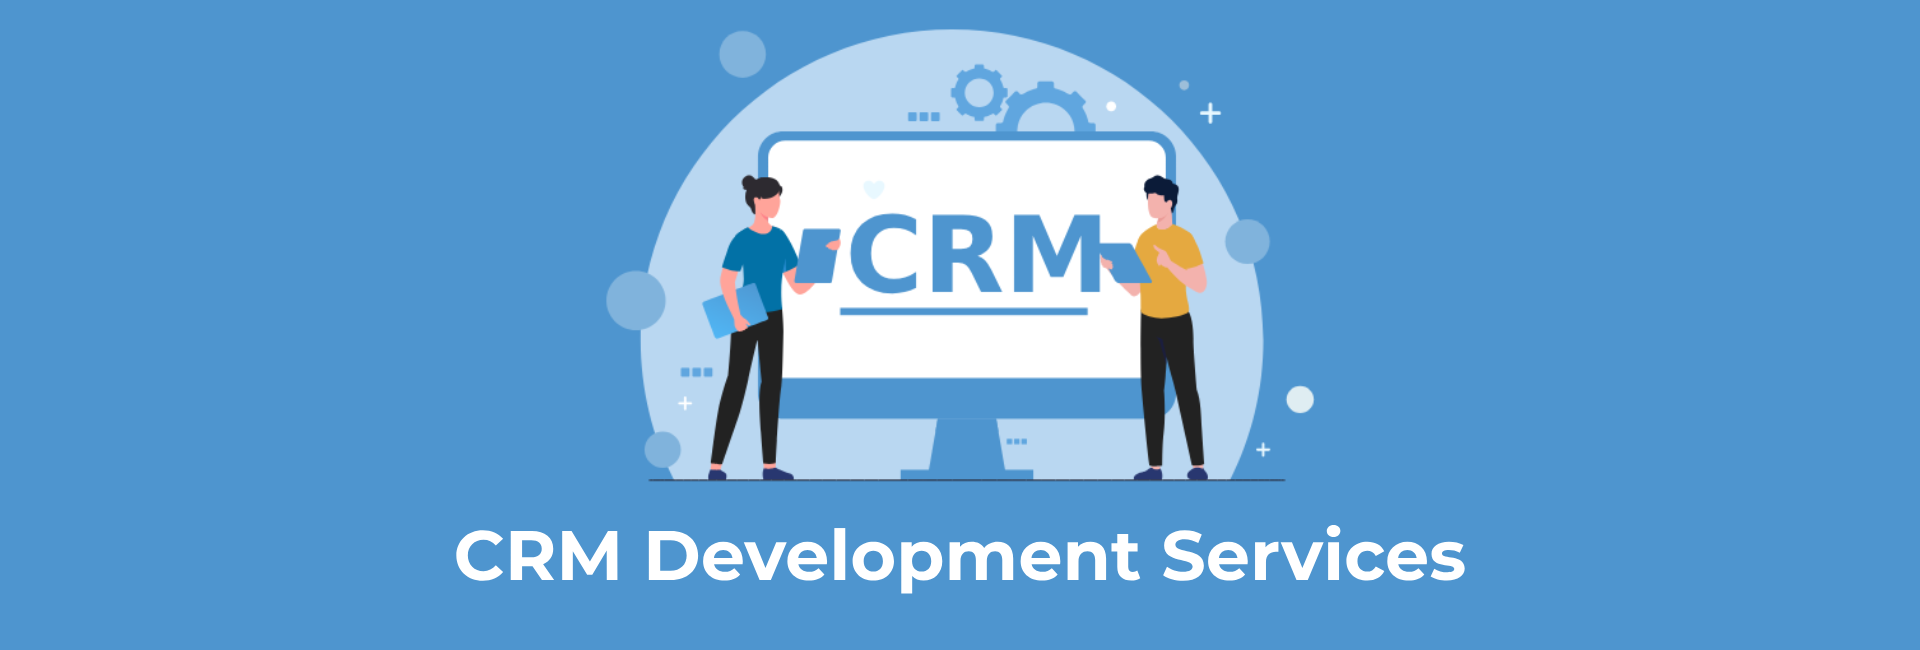 Image of CRM(Customer Relationship Management System) Development Services